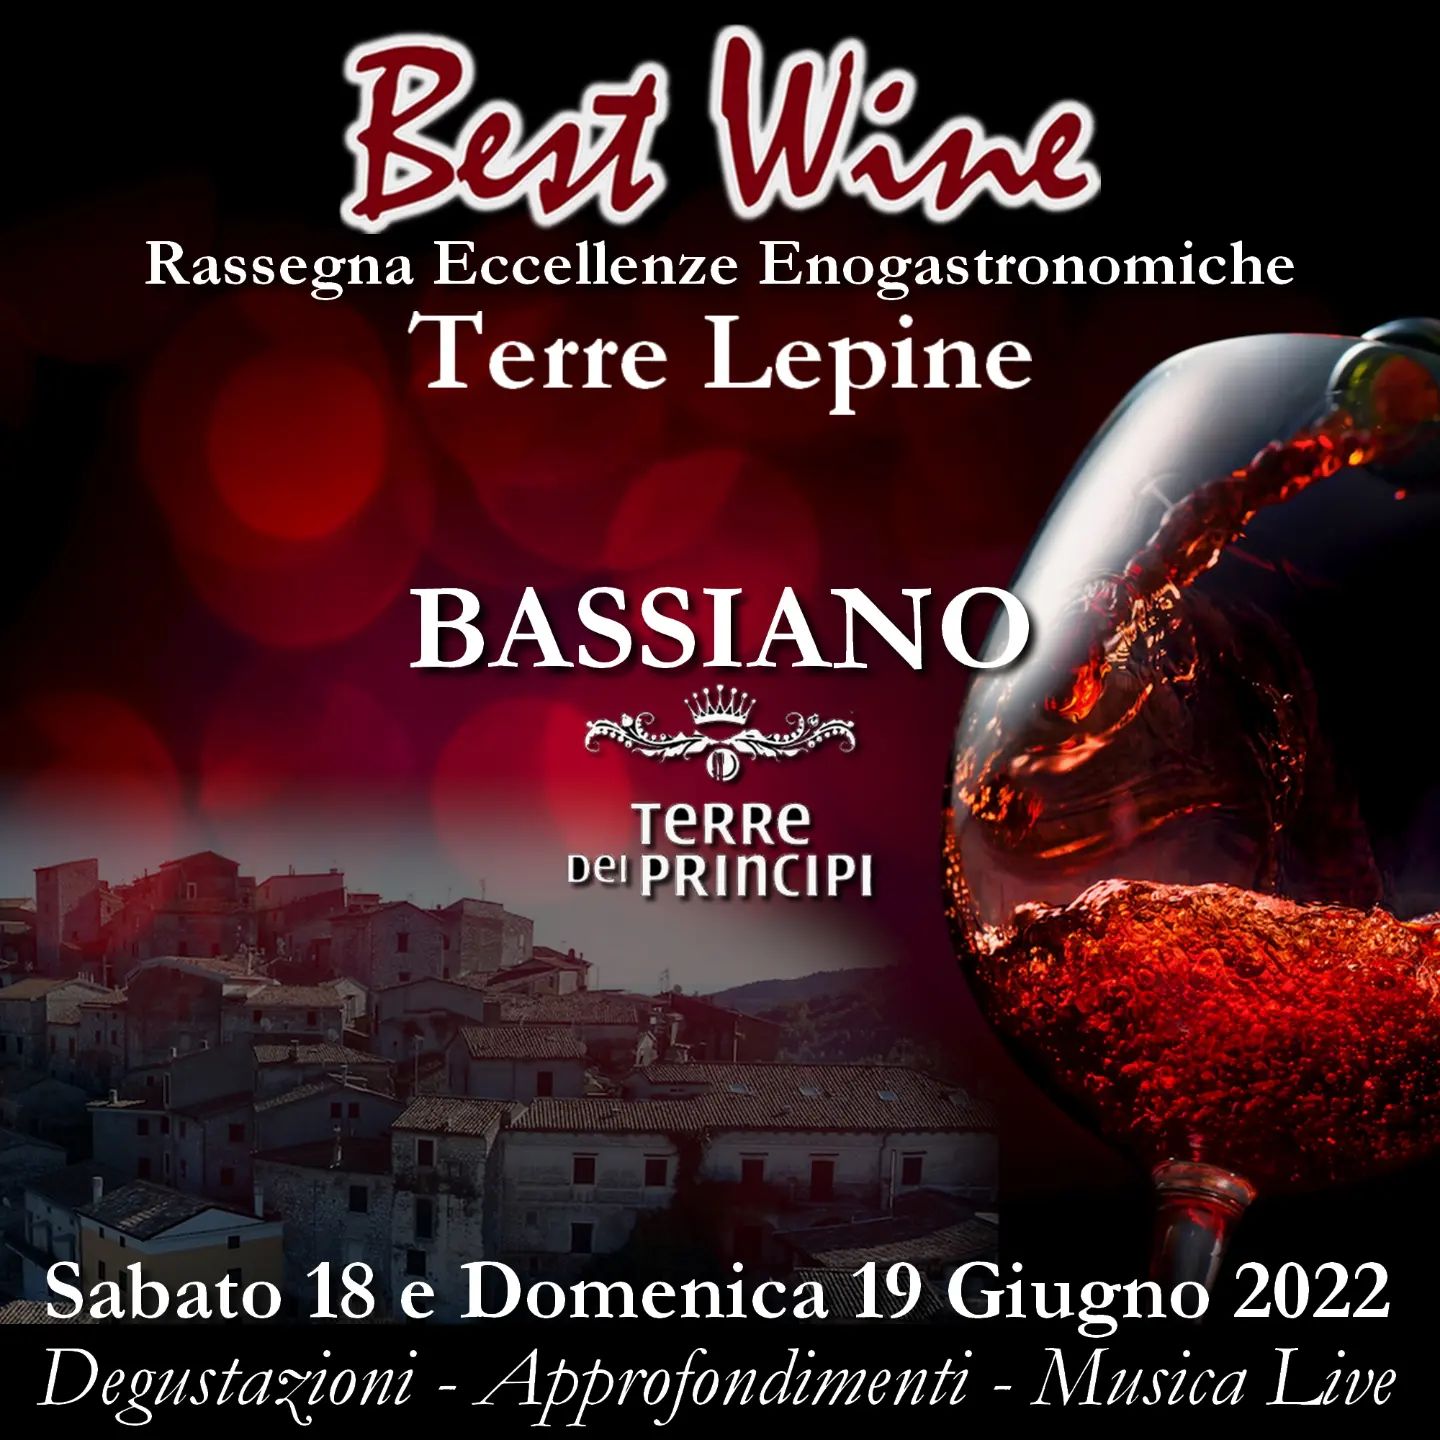 Bassiano: Best Wine 2022 - Terre Lepine @ Bassiano